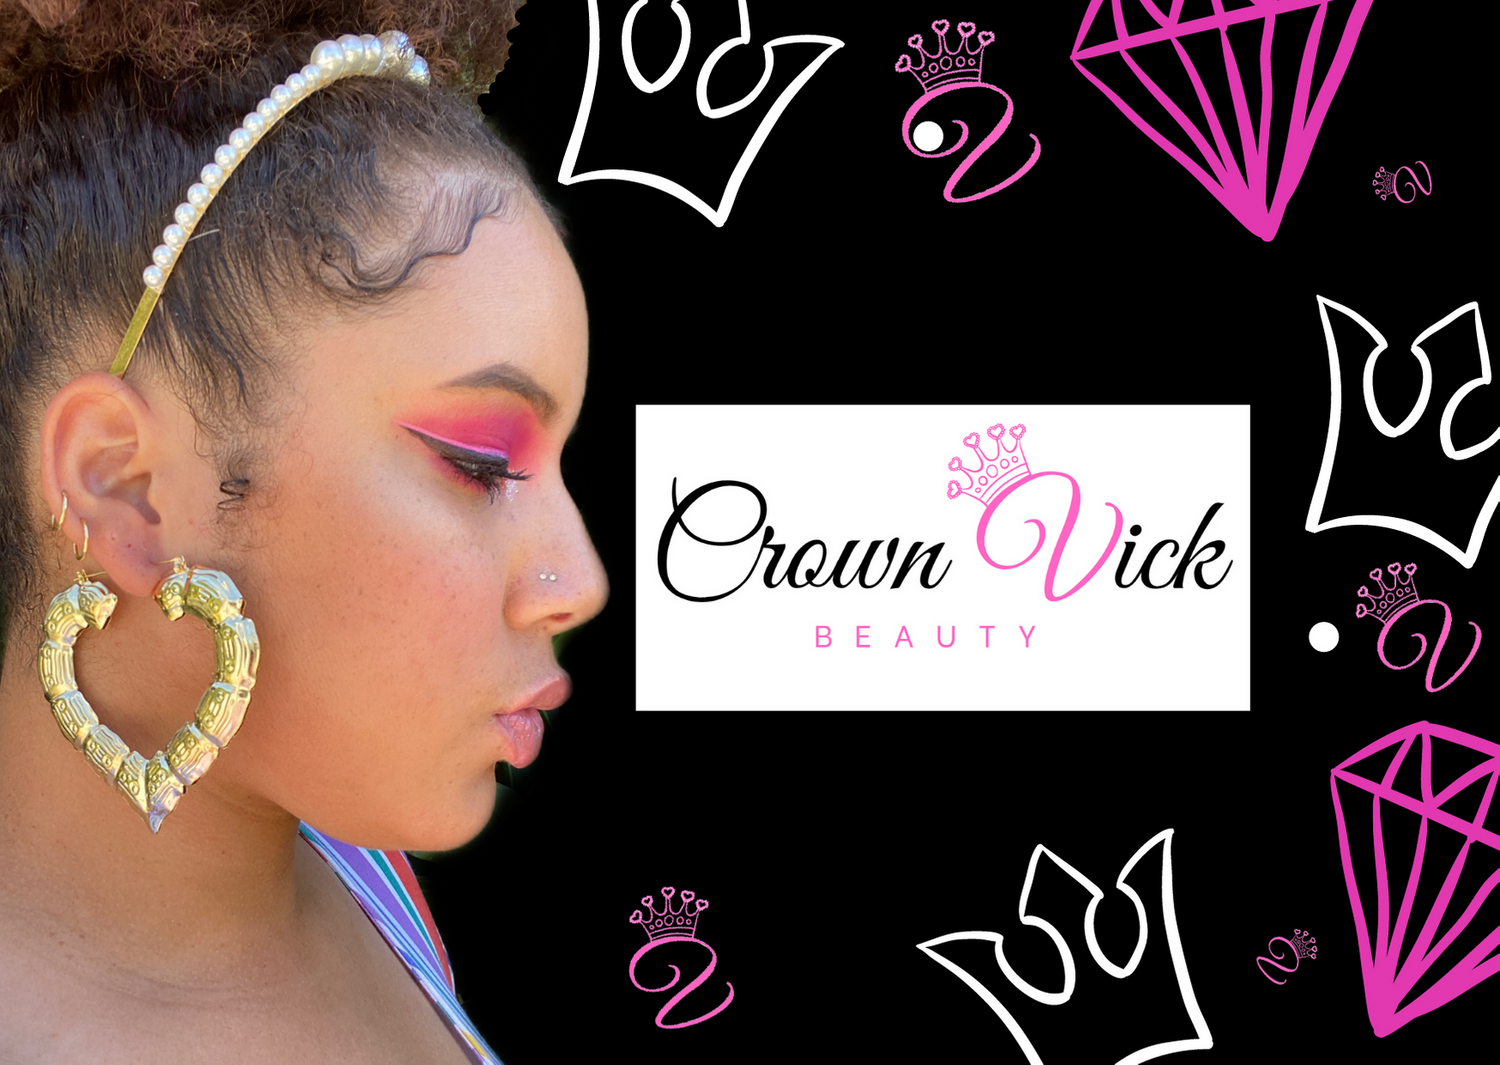 LV Stud Earrings – Crown Vick Beauty